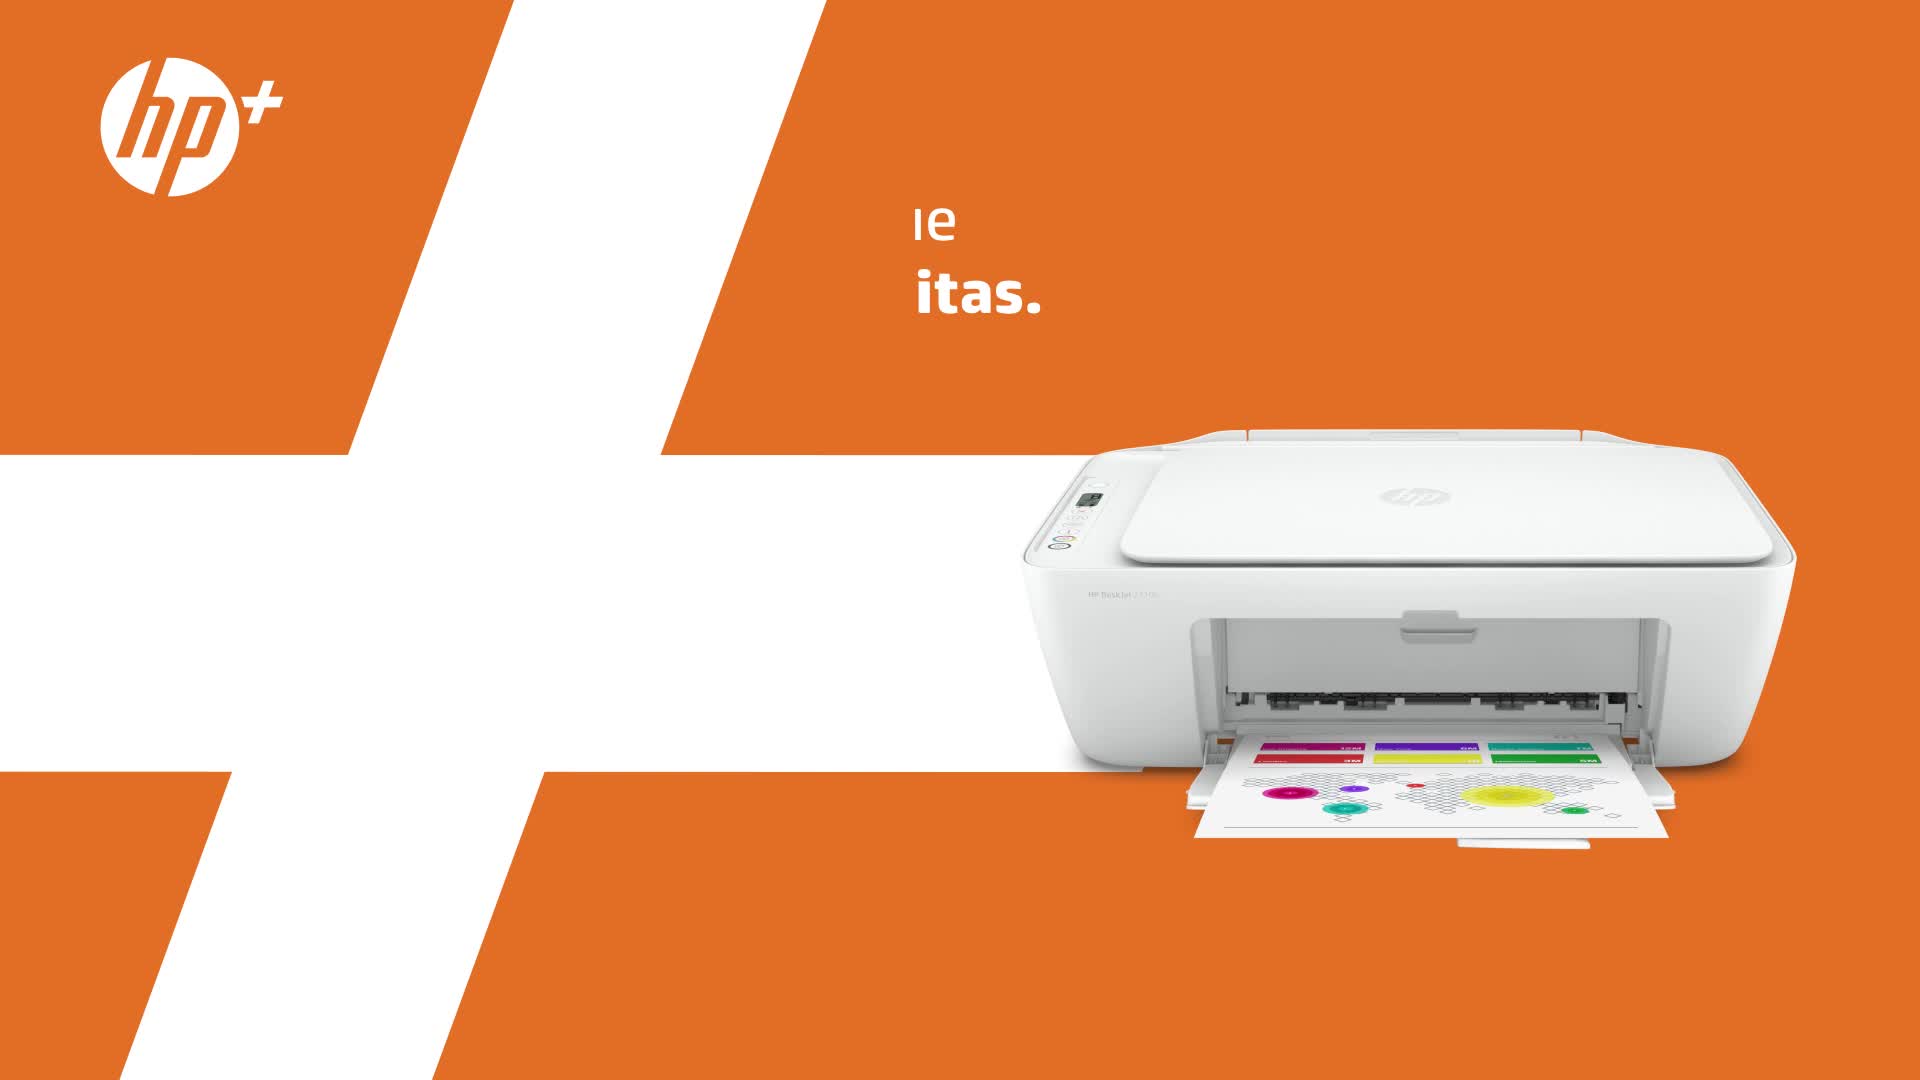 Impresora multifunción Deskjet 2720e + 6 meses gratis de Instant Ink por  26,38€